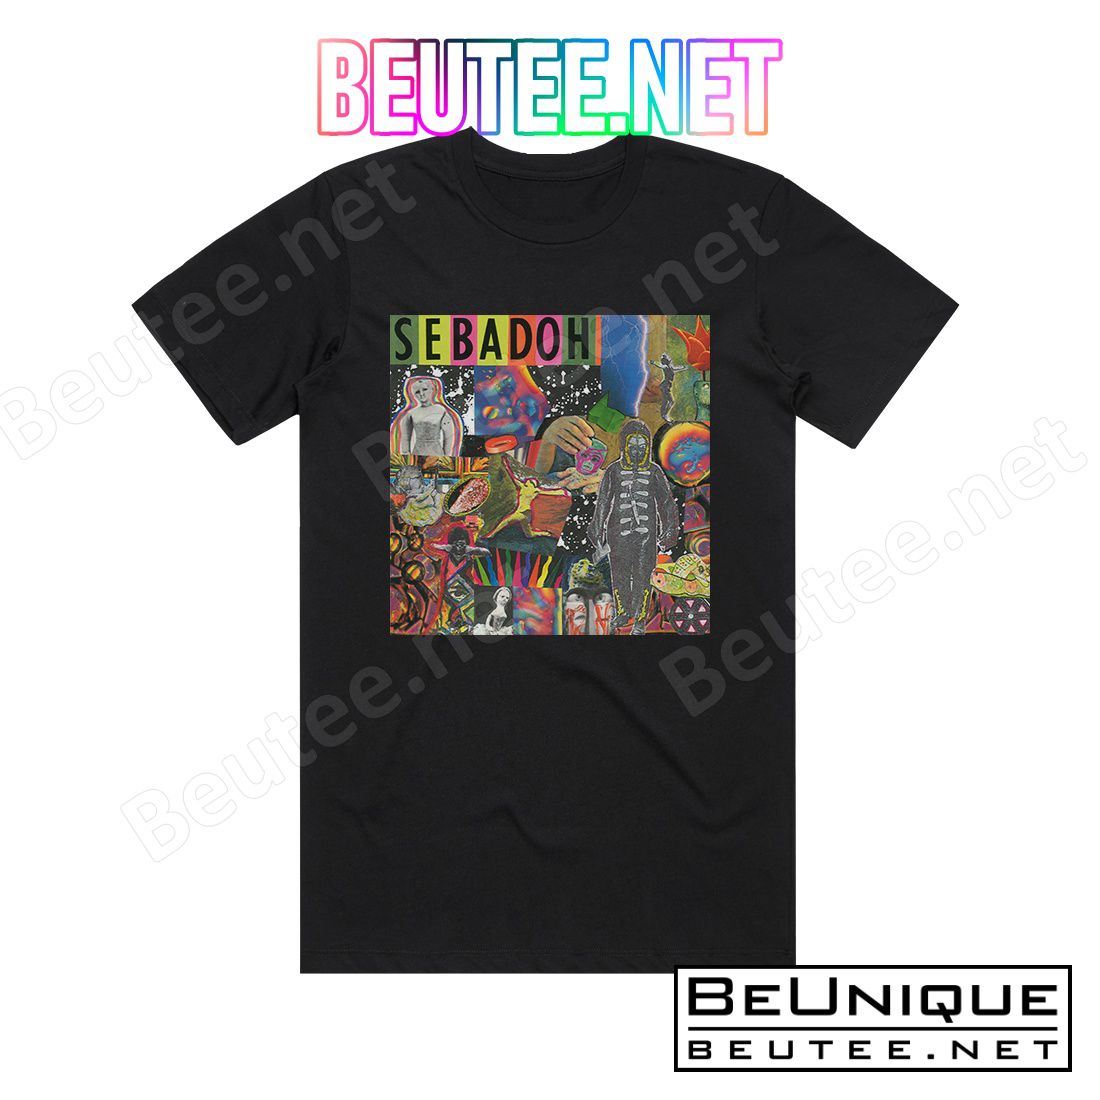 Sebadoh Smash Your Head On The Punk Rock Album Cover T-Shirt